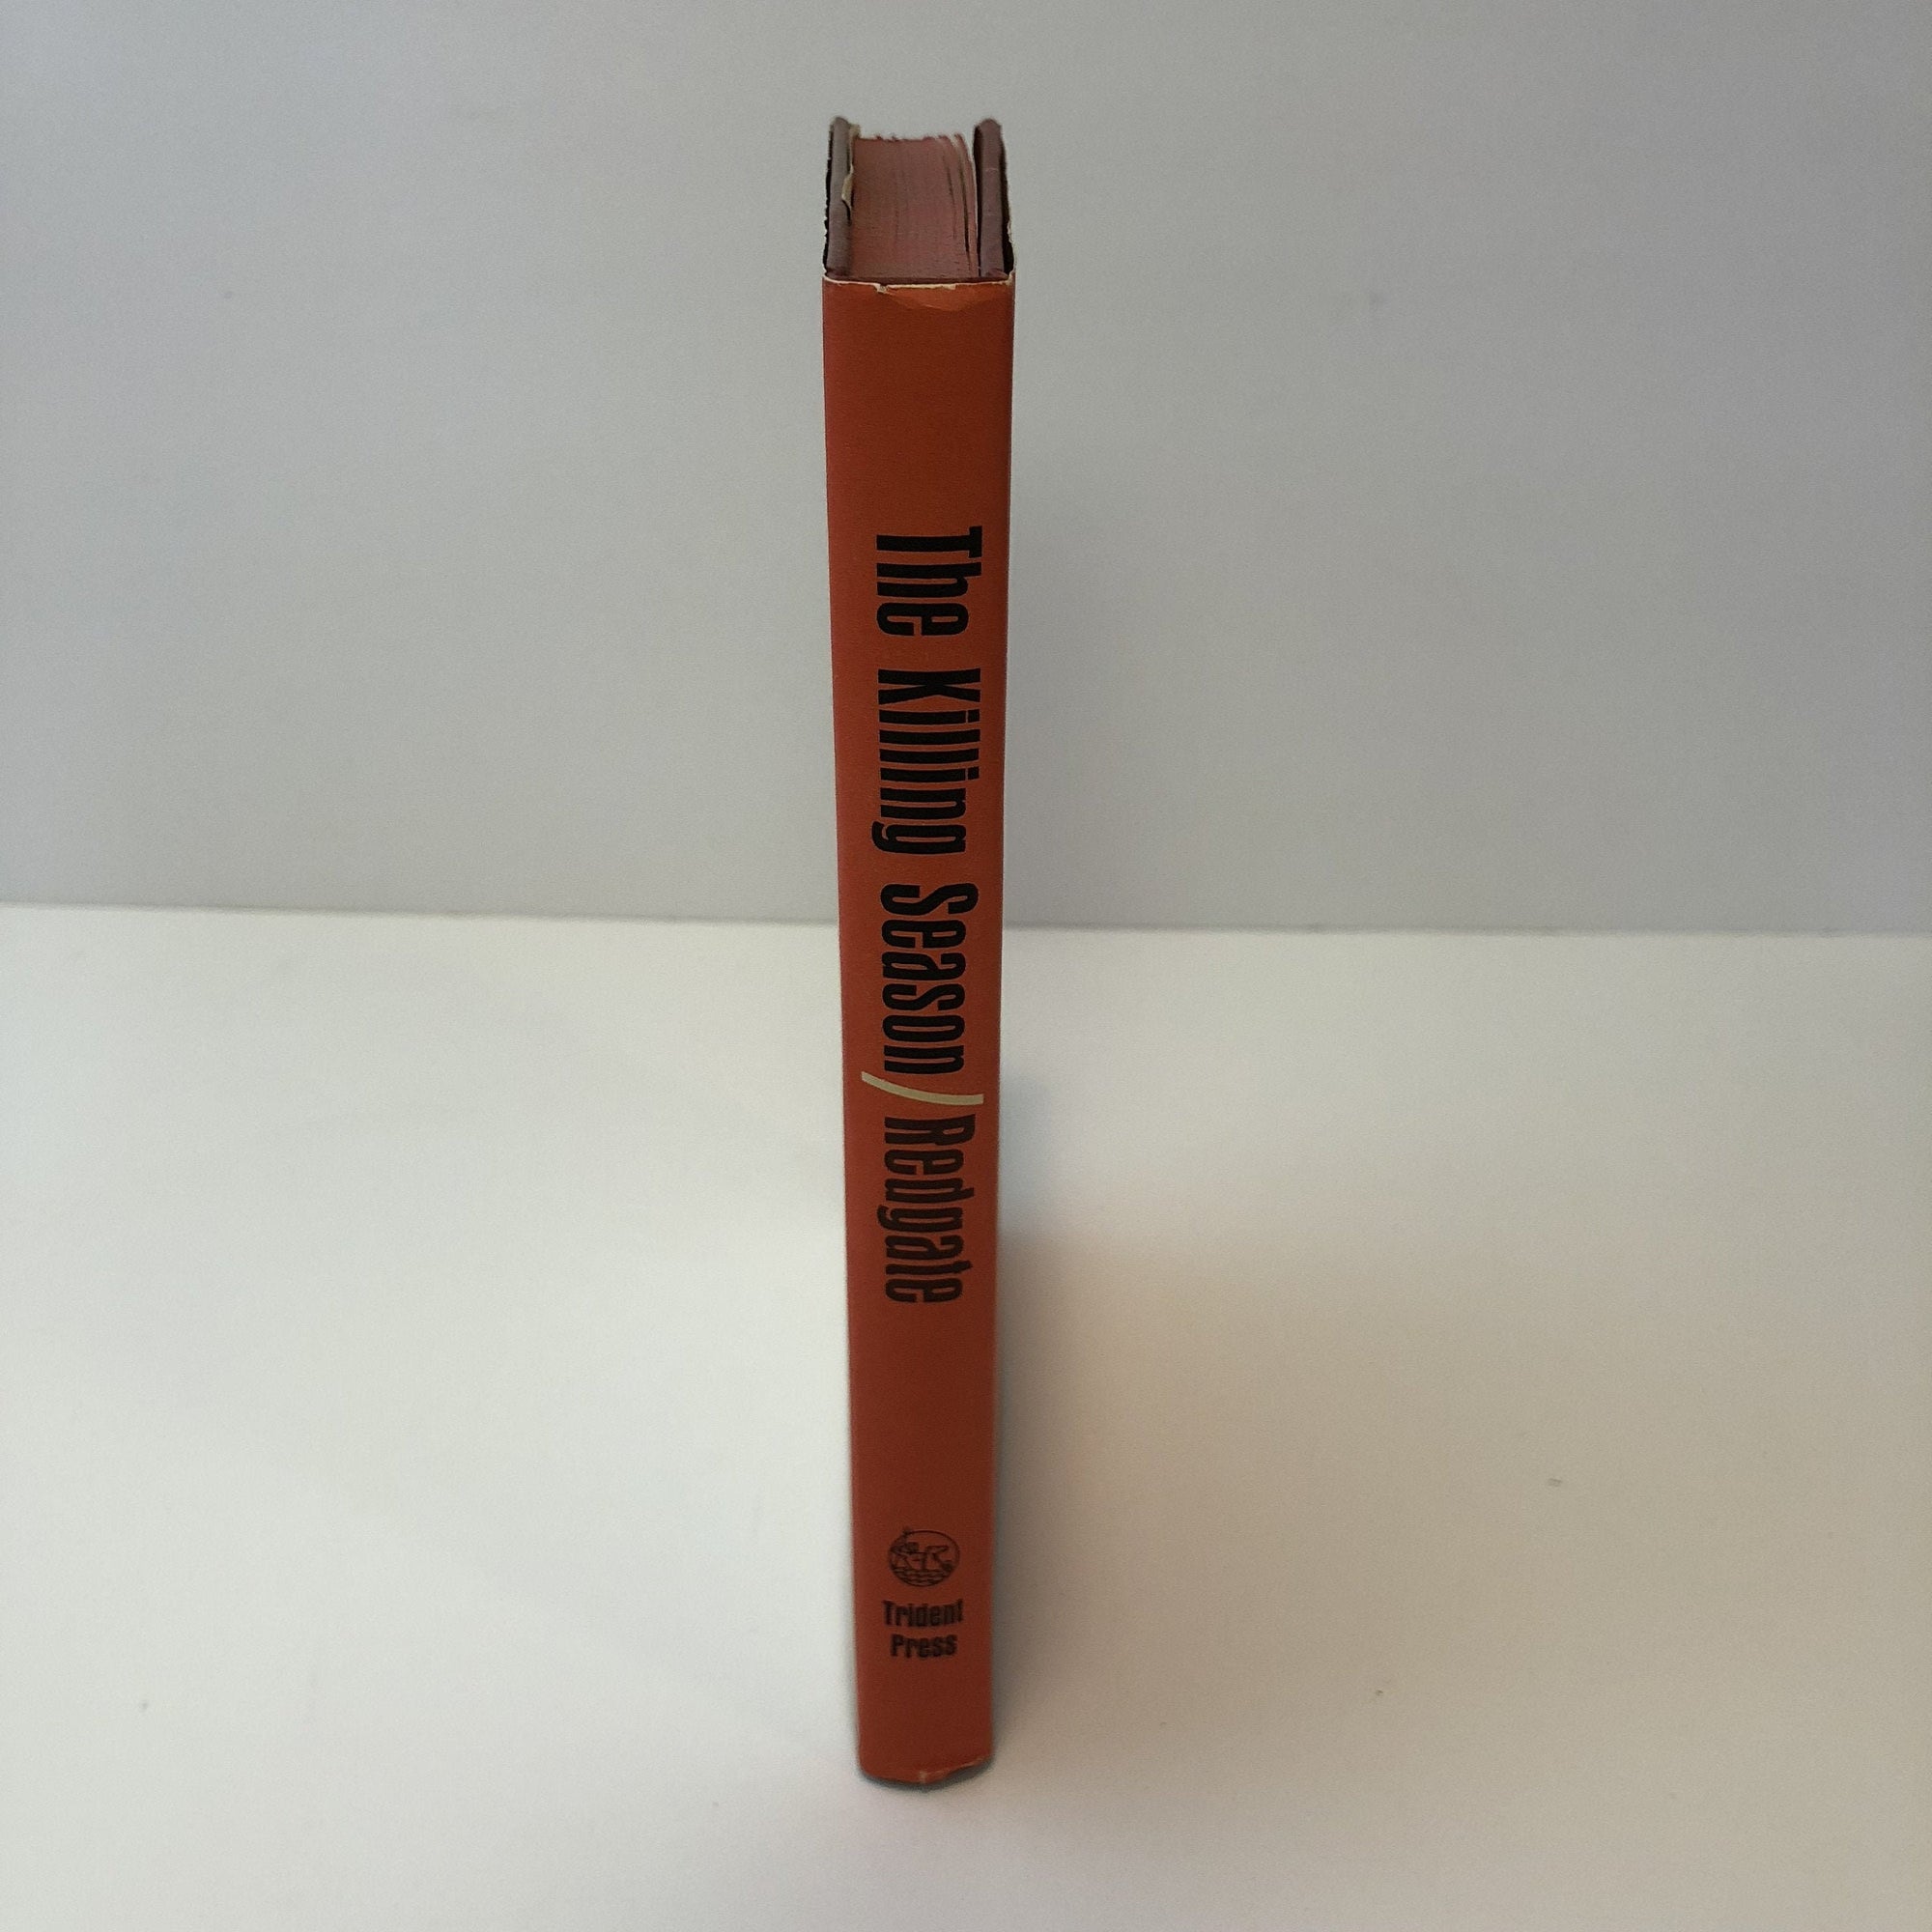 The Killing Season by John Redgate 1967 With Original Dust Jacket Vintage Book Vintage Book